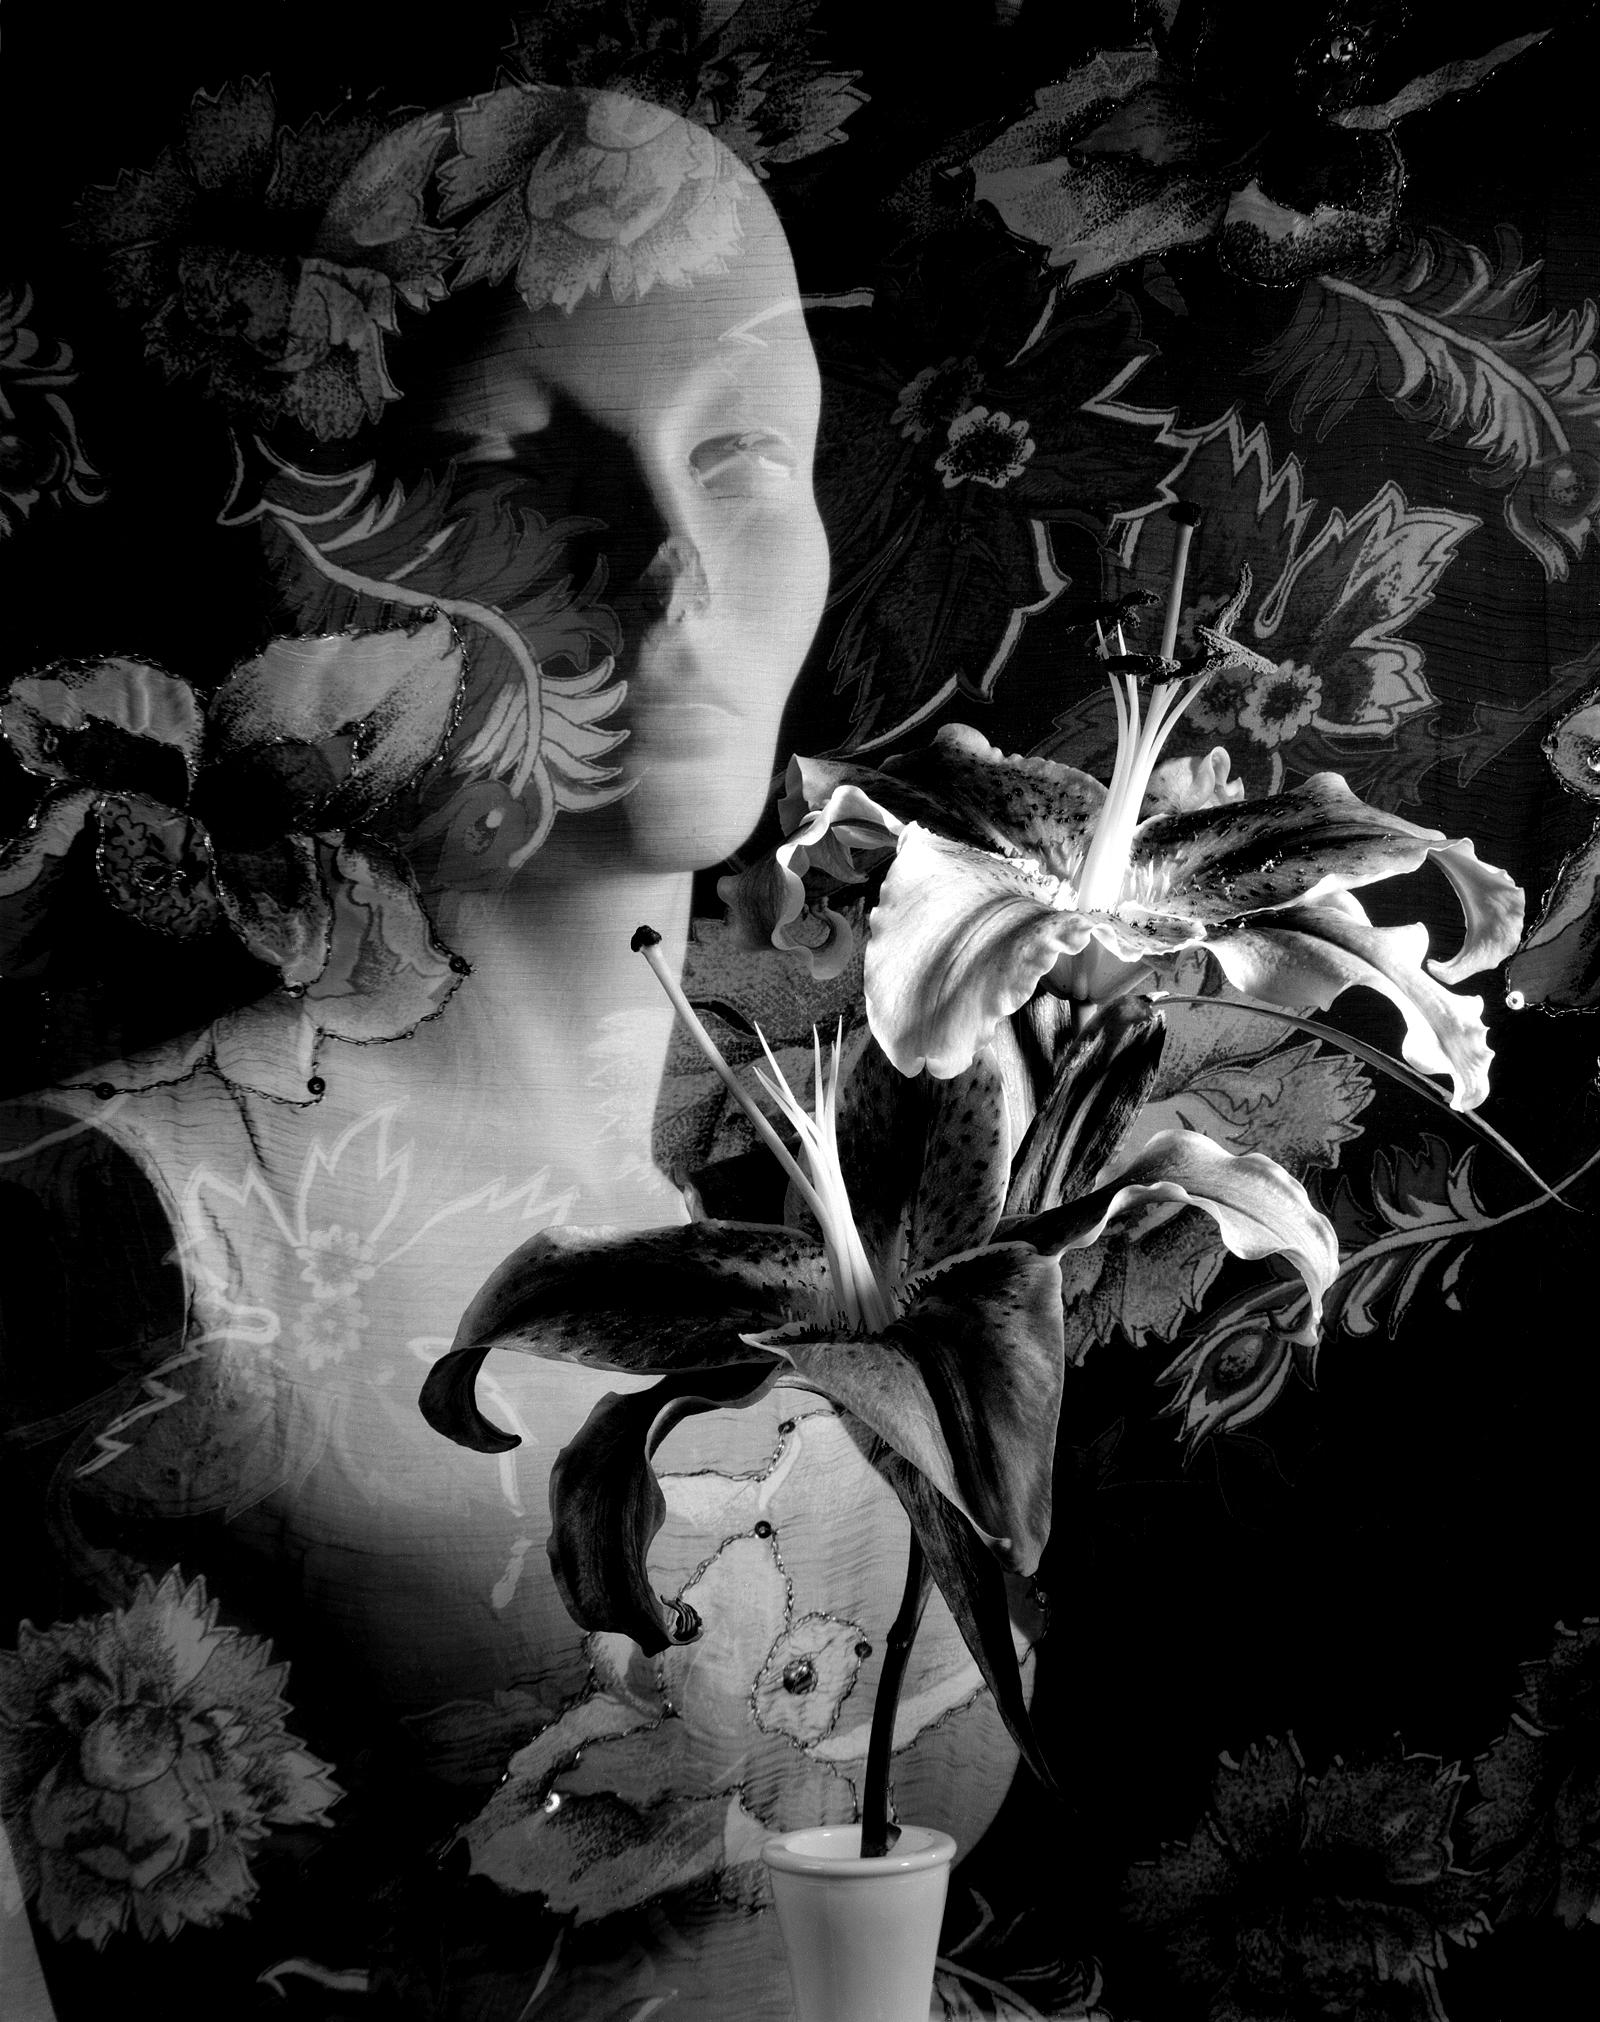 Howard Nathenson Still-Life Photograph - “Lilies, Manikin, Floral Fabric”, digital black and white, still life photograph